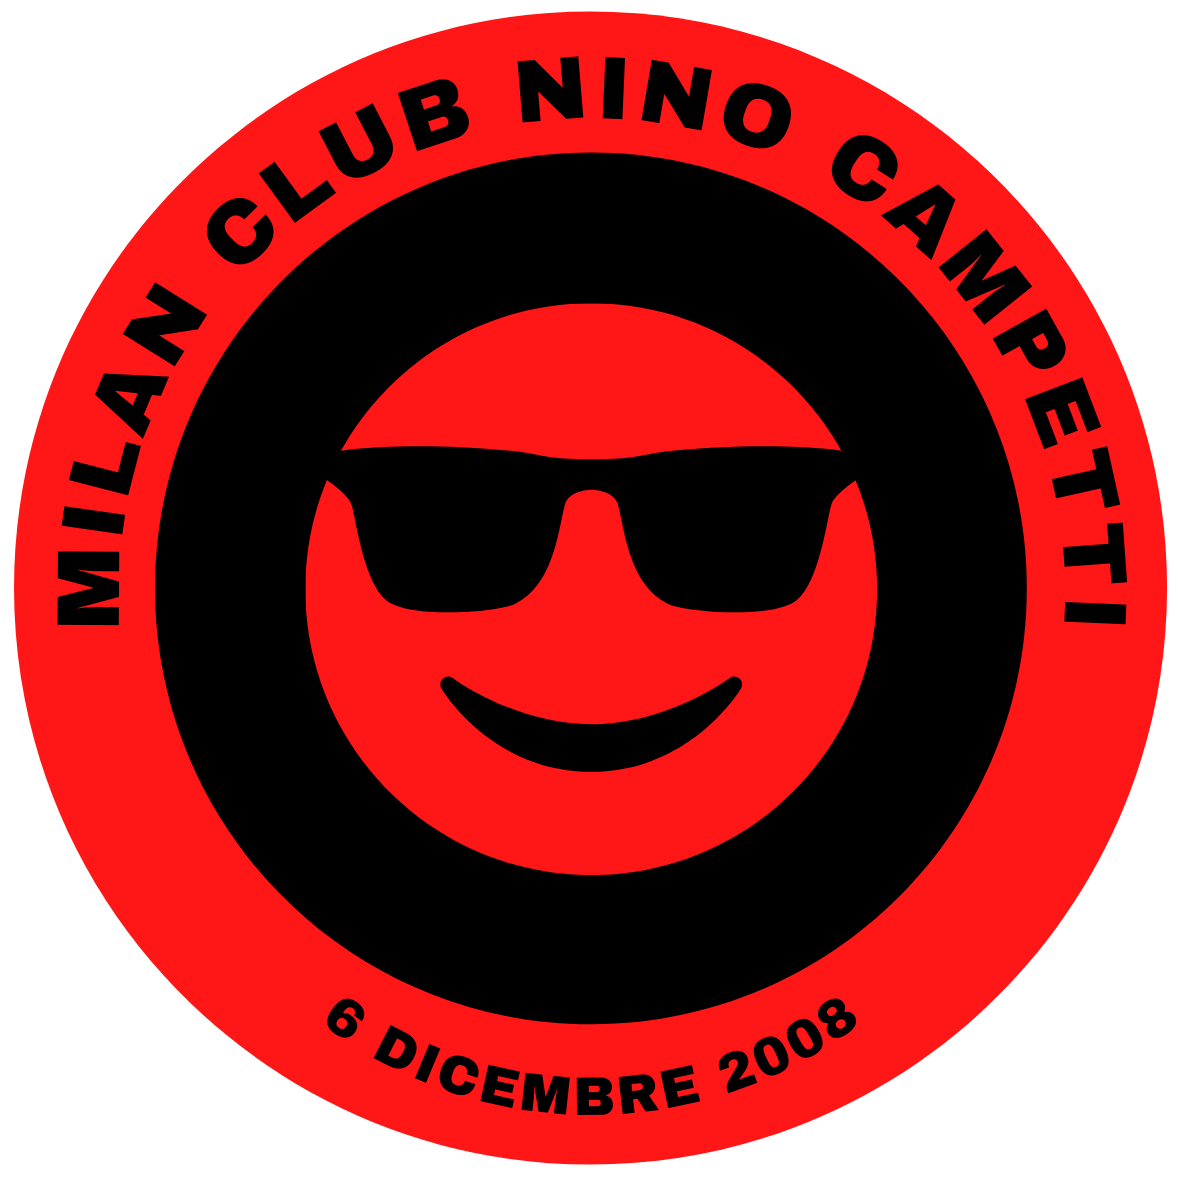 Nino Campetti